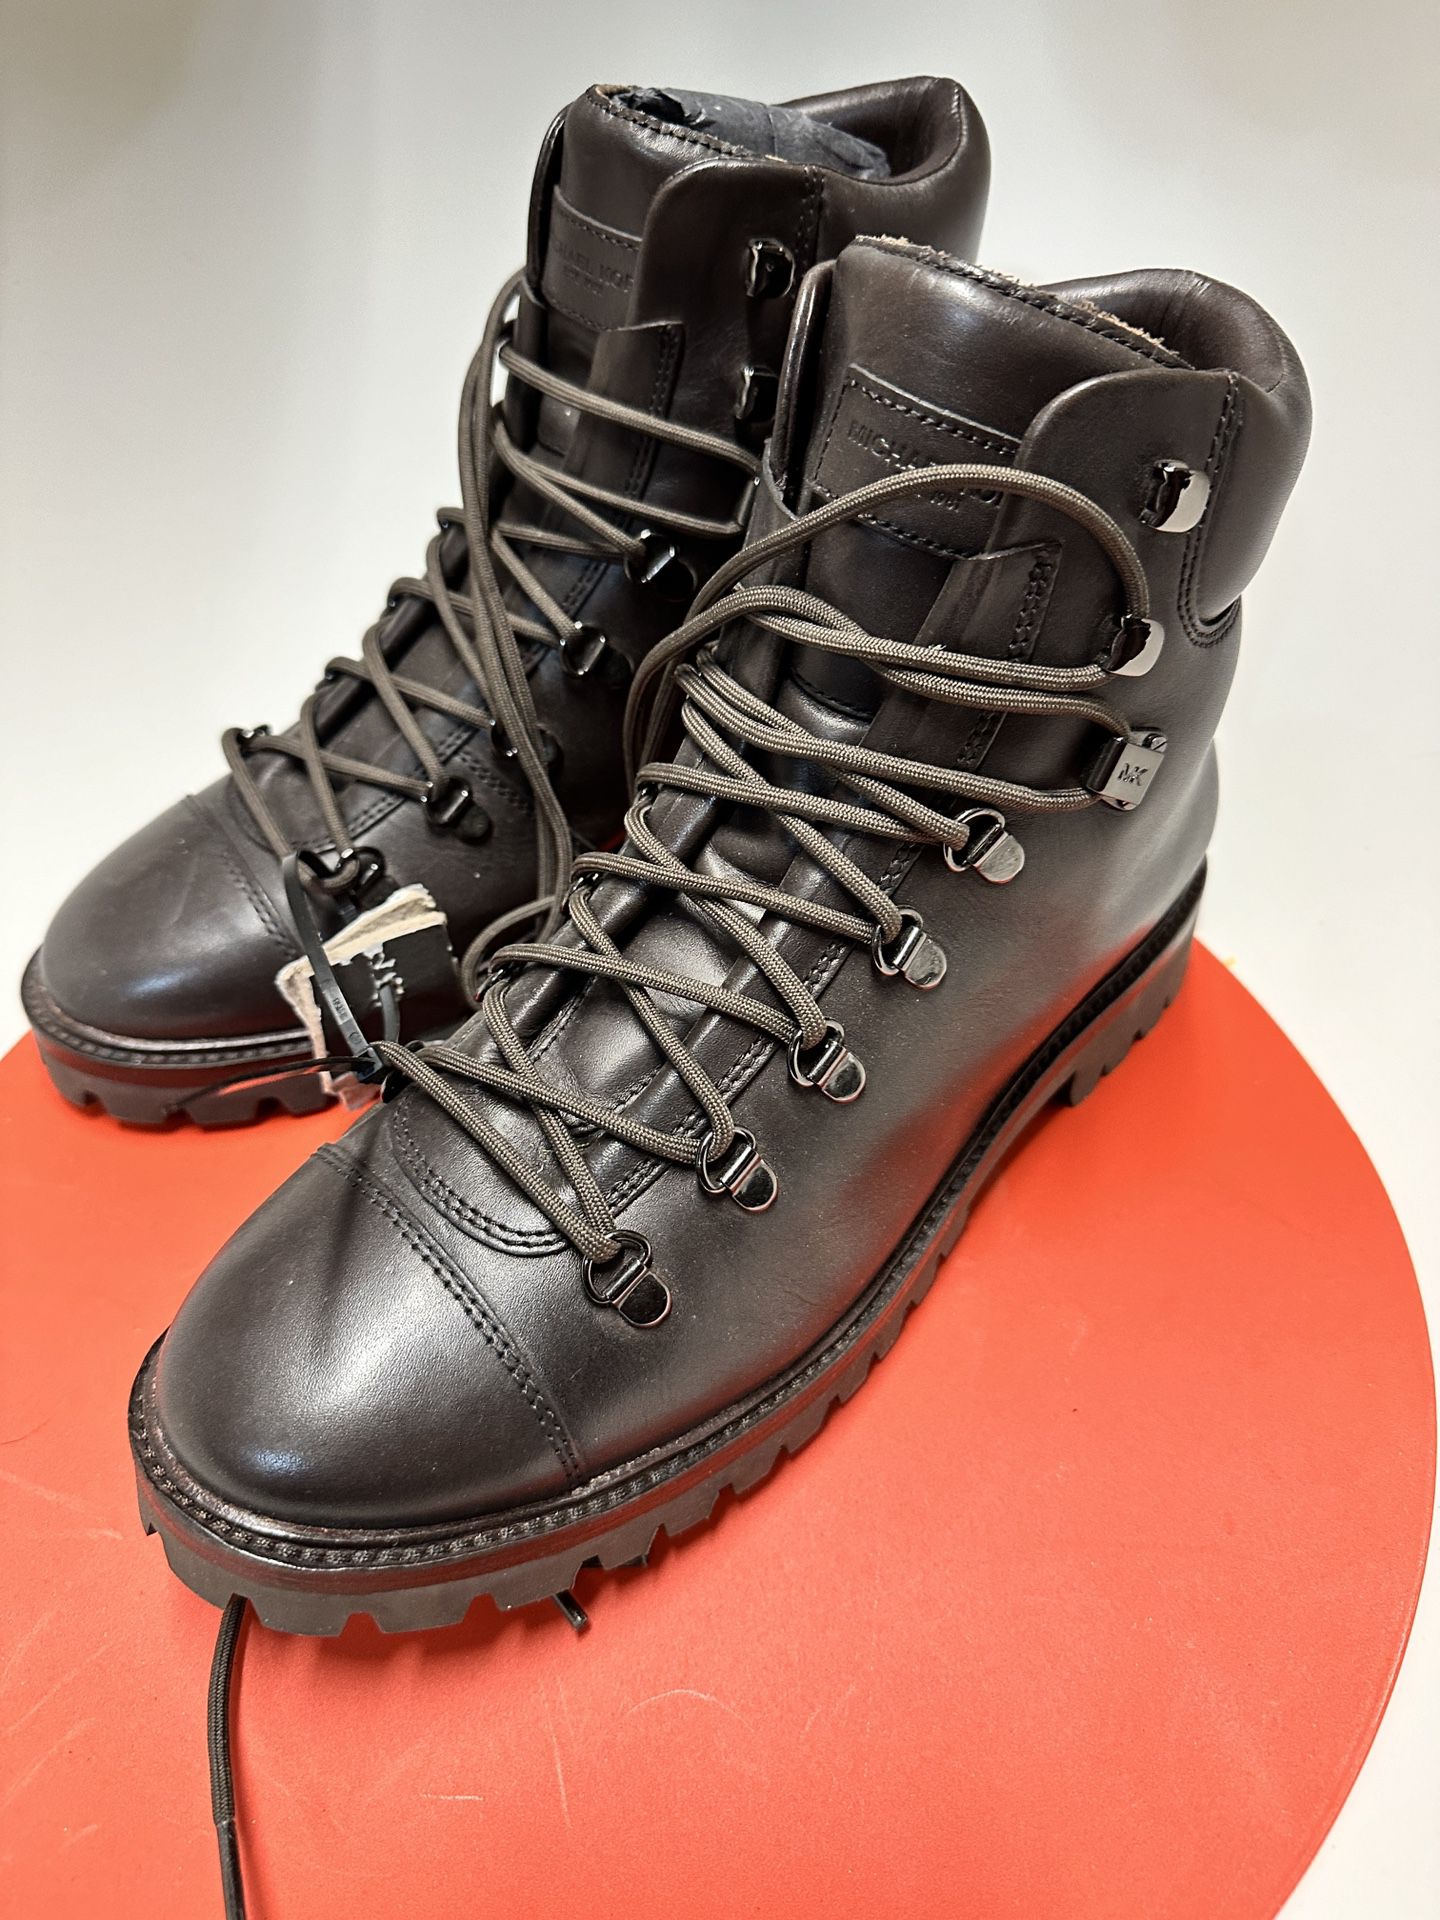 Michael Kors Lance Hiking Boots Sz 8.5